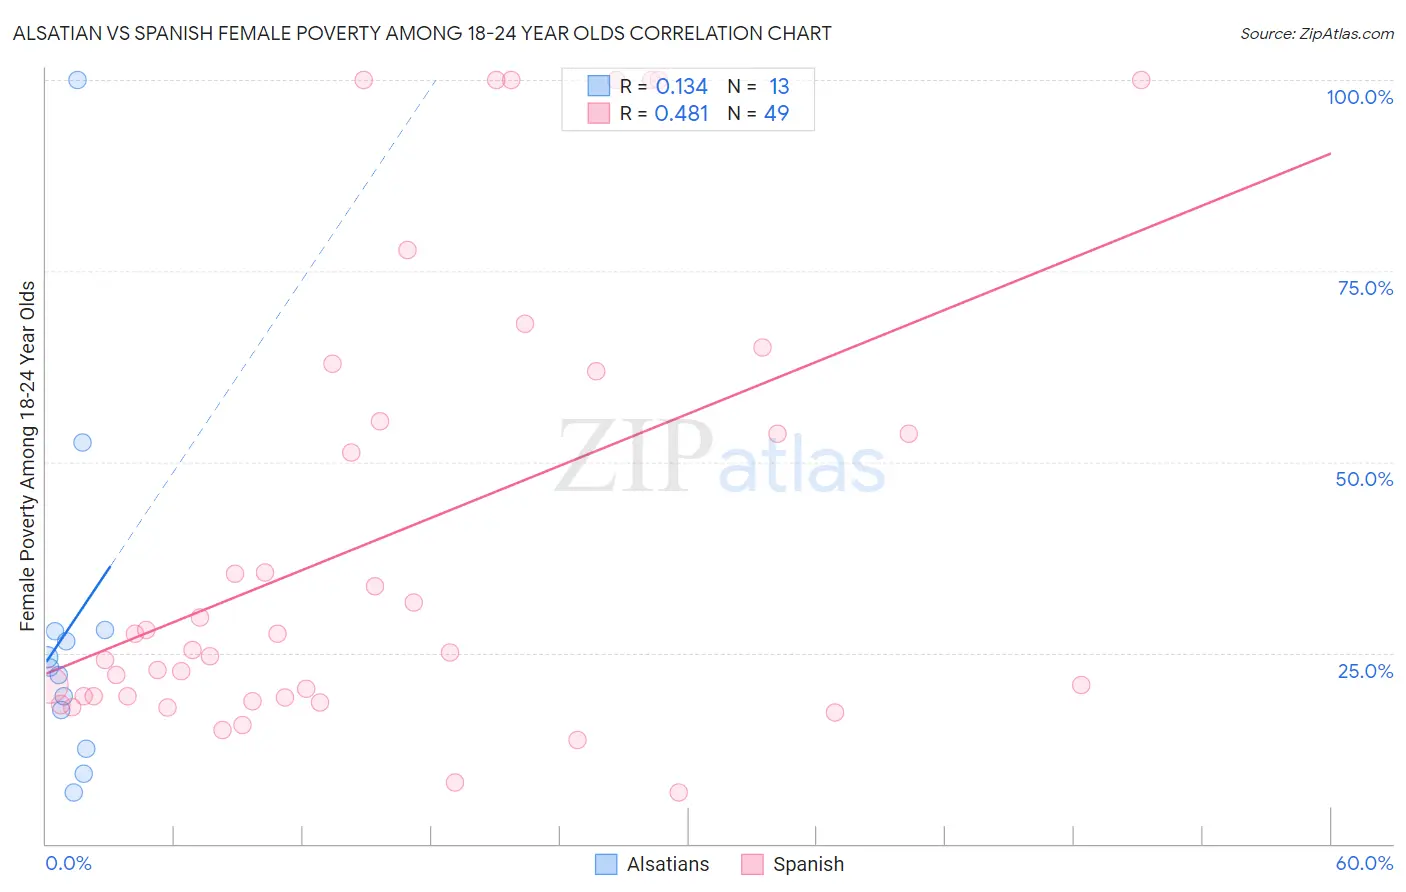 Alsatian vs Spanish Female Poverty Among 18-24 Year Olds